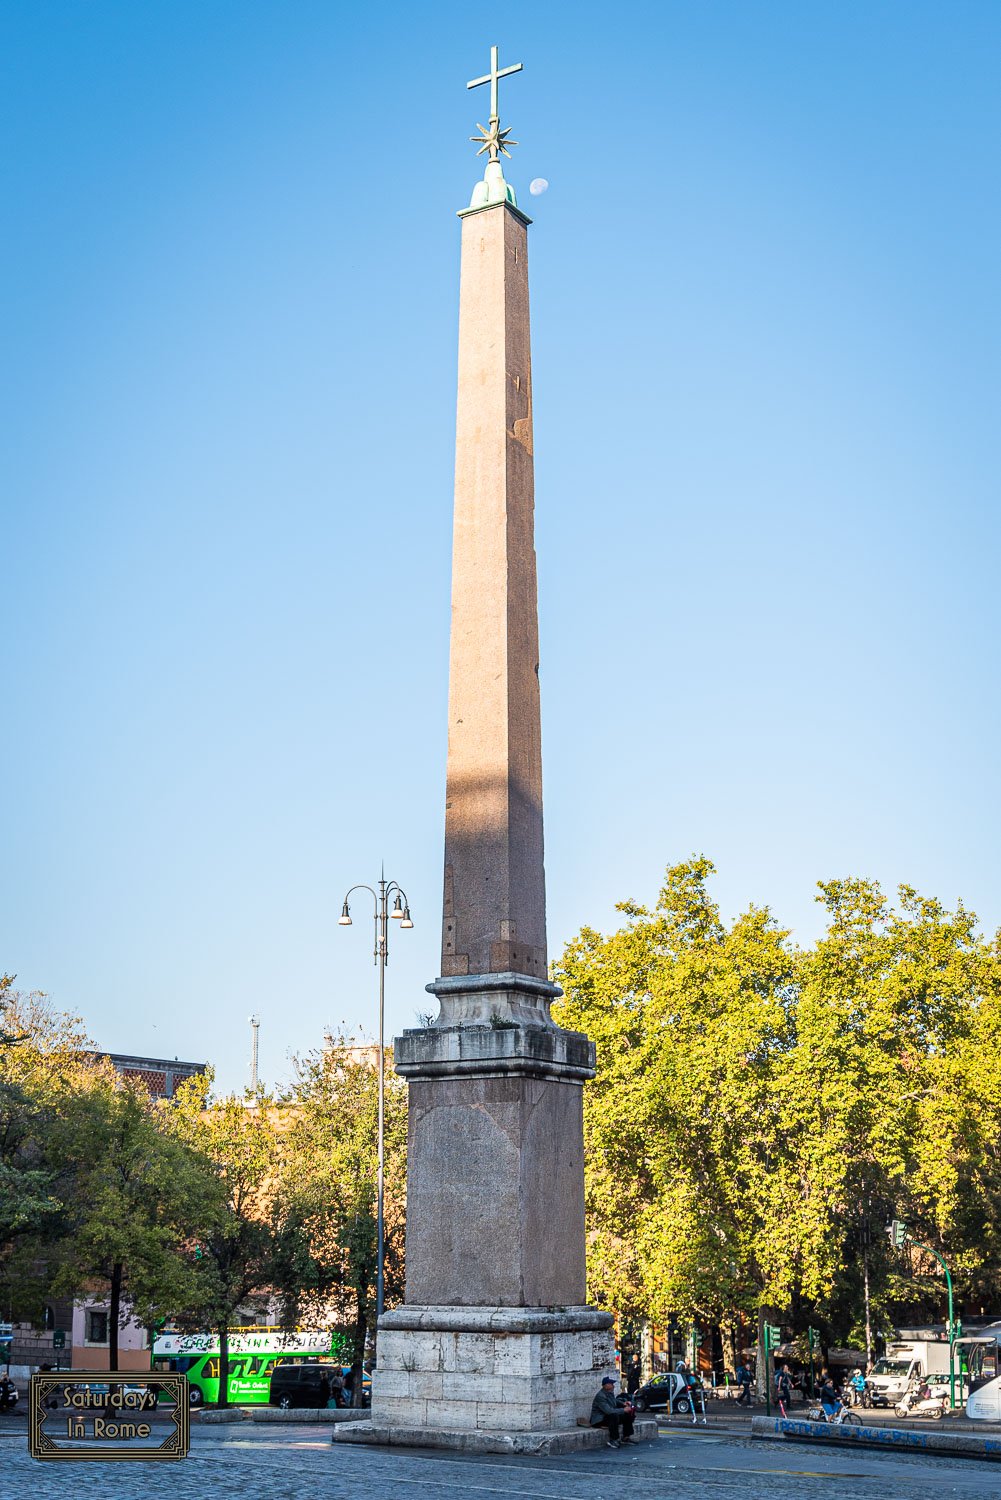 Obelisks In Rome - The Esquilino